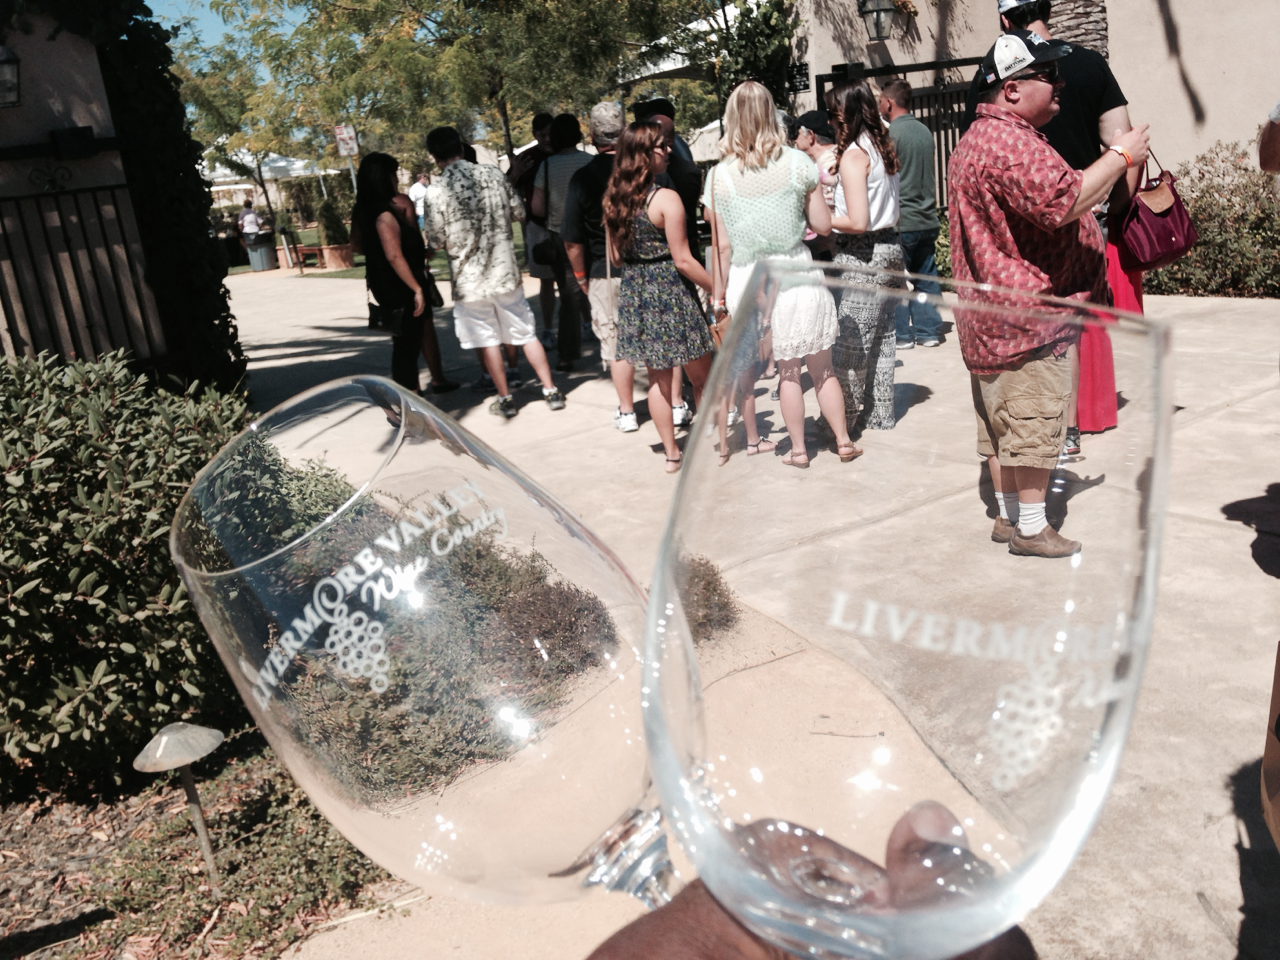 Camerafornia — Great time capturing the Livermore wine festival!